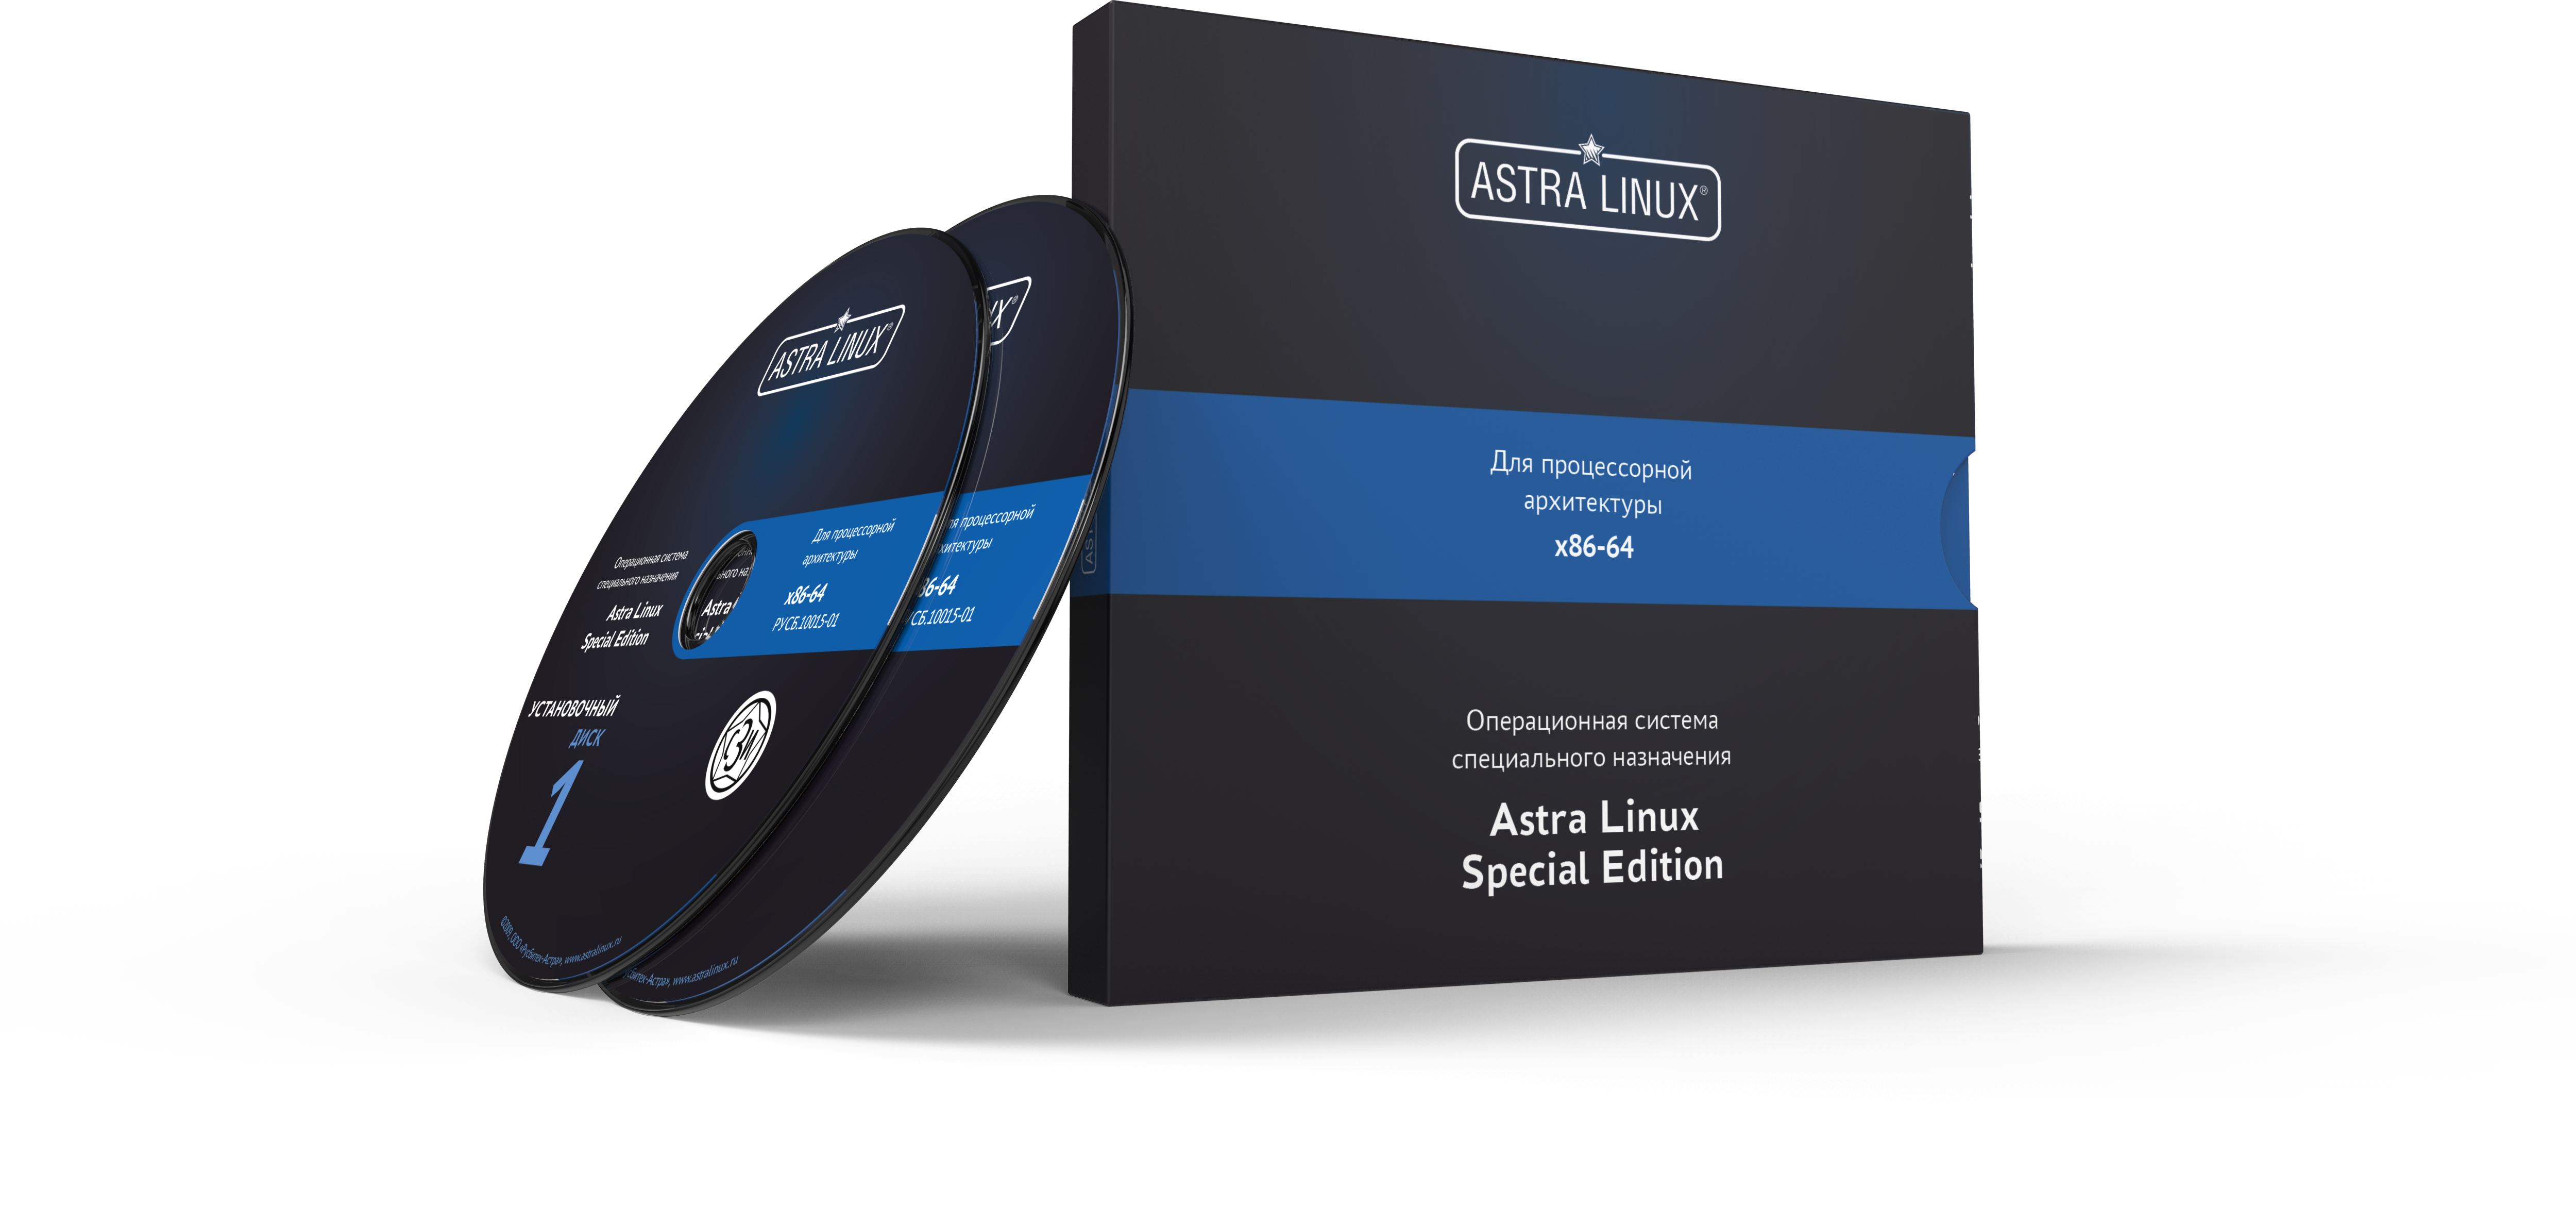 Astra Linux Special Edition 1.7 - Воронеж, "Усиленный", OEM, ФСТЭК, без огр. срока, ТП "Стандарт" на 36 мес.